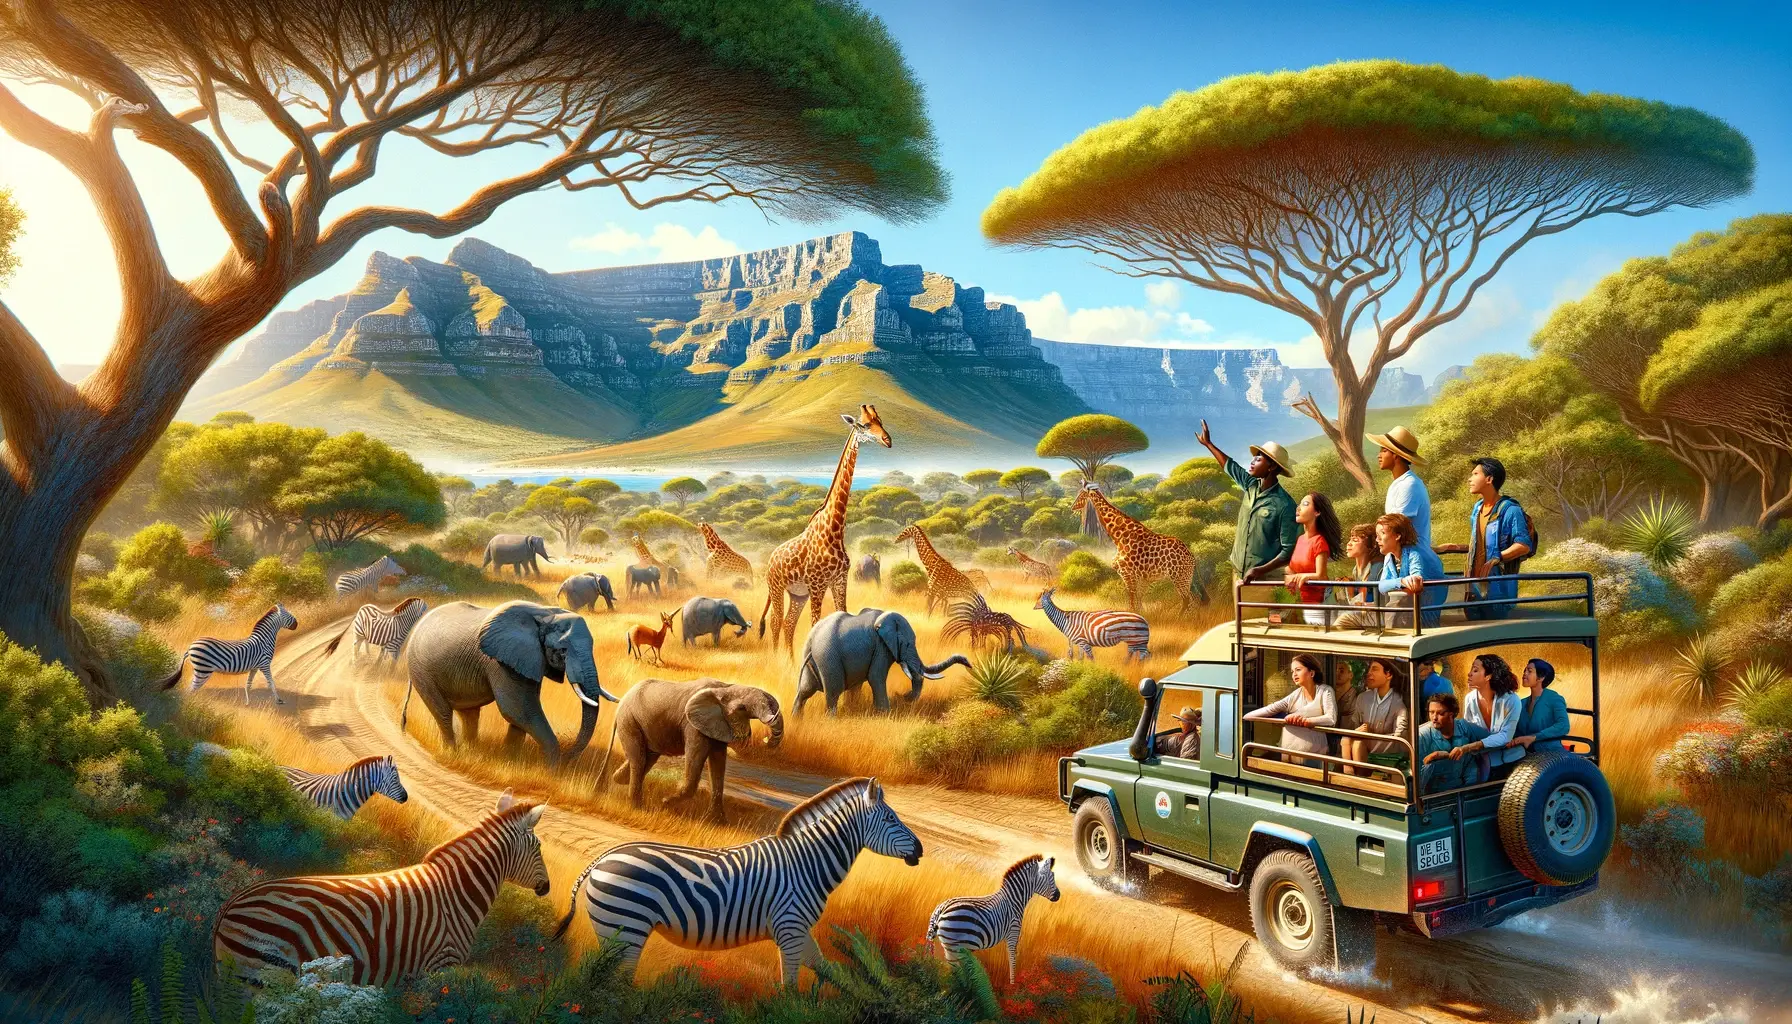 A captivating and adventurous image of a safari near Cape Town